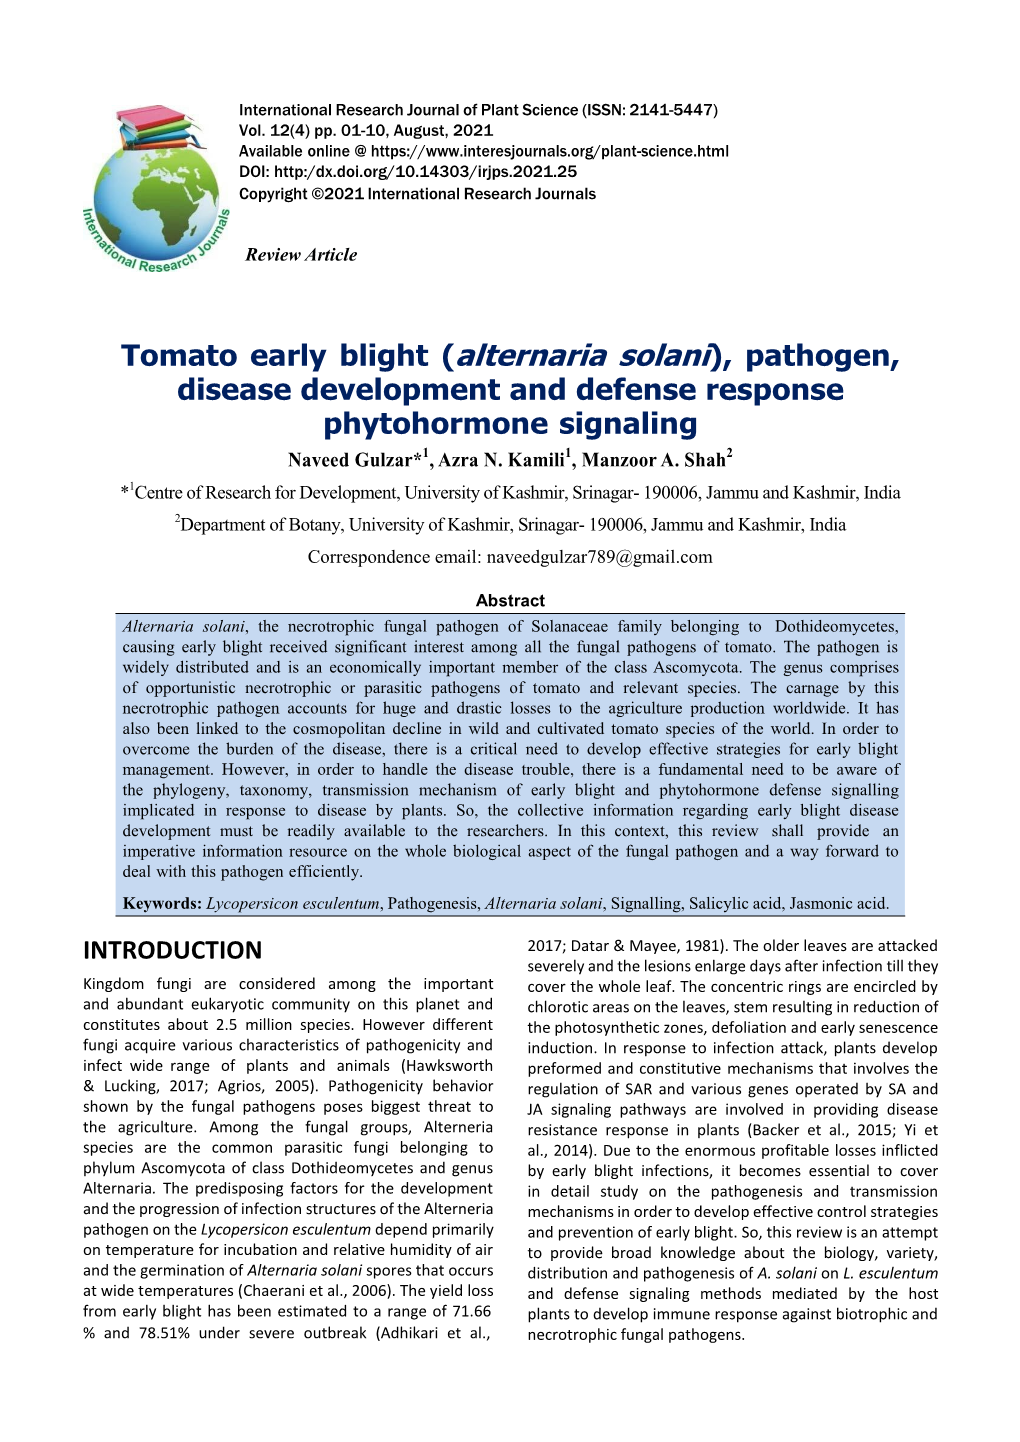 Alternaria Solani), Pathogen, Disease Development and Defense Response Phytohormone Signaling Naveed Gulzar*1, Azra N